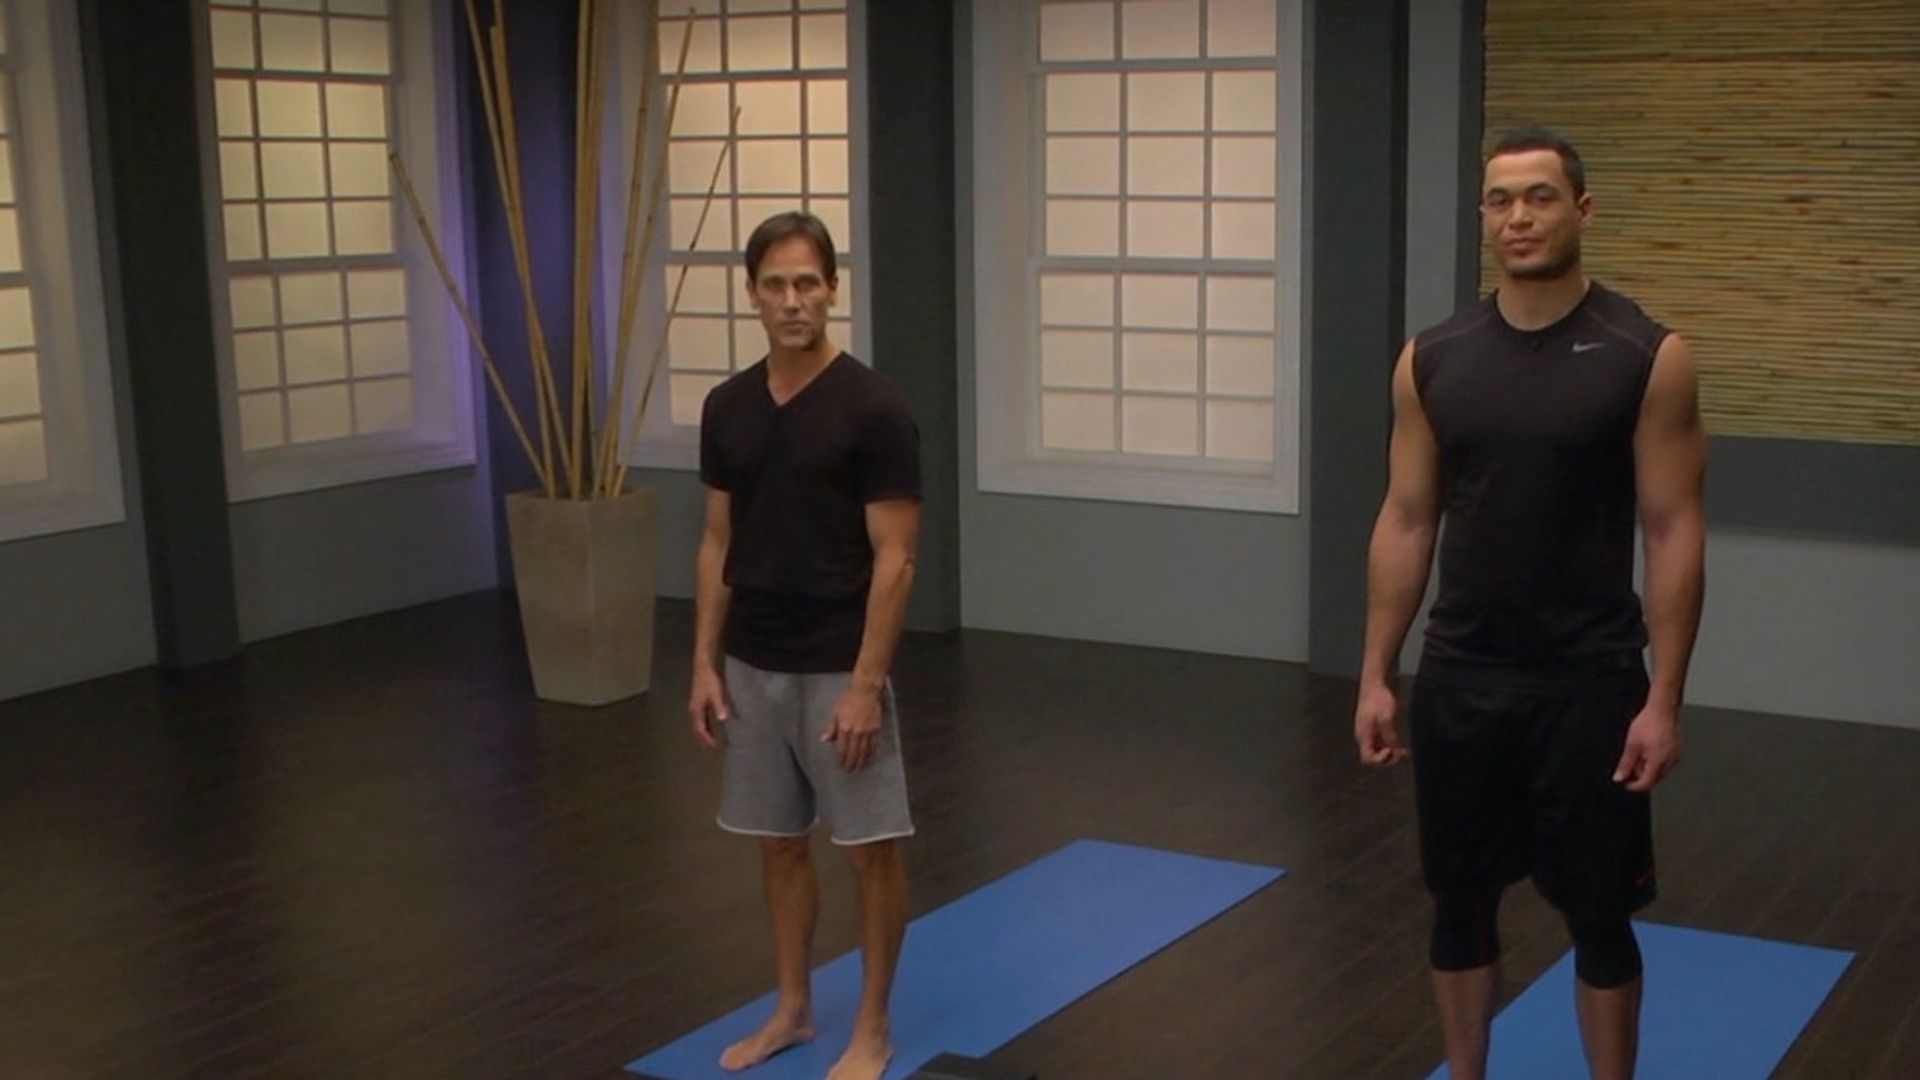 Gaiam Athletic Yoga: Yoga for Power with Giancarlo Stanton